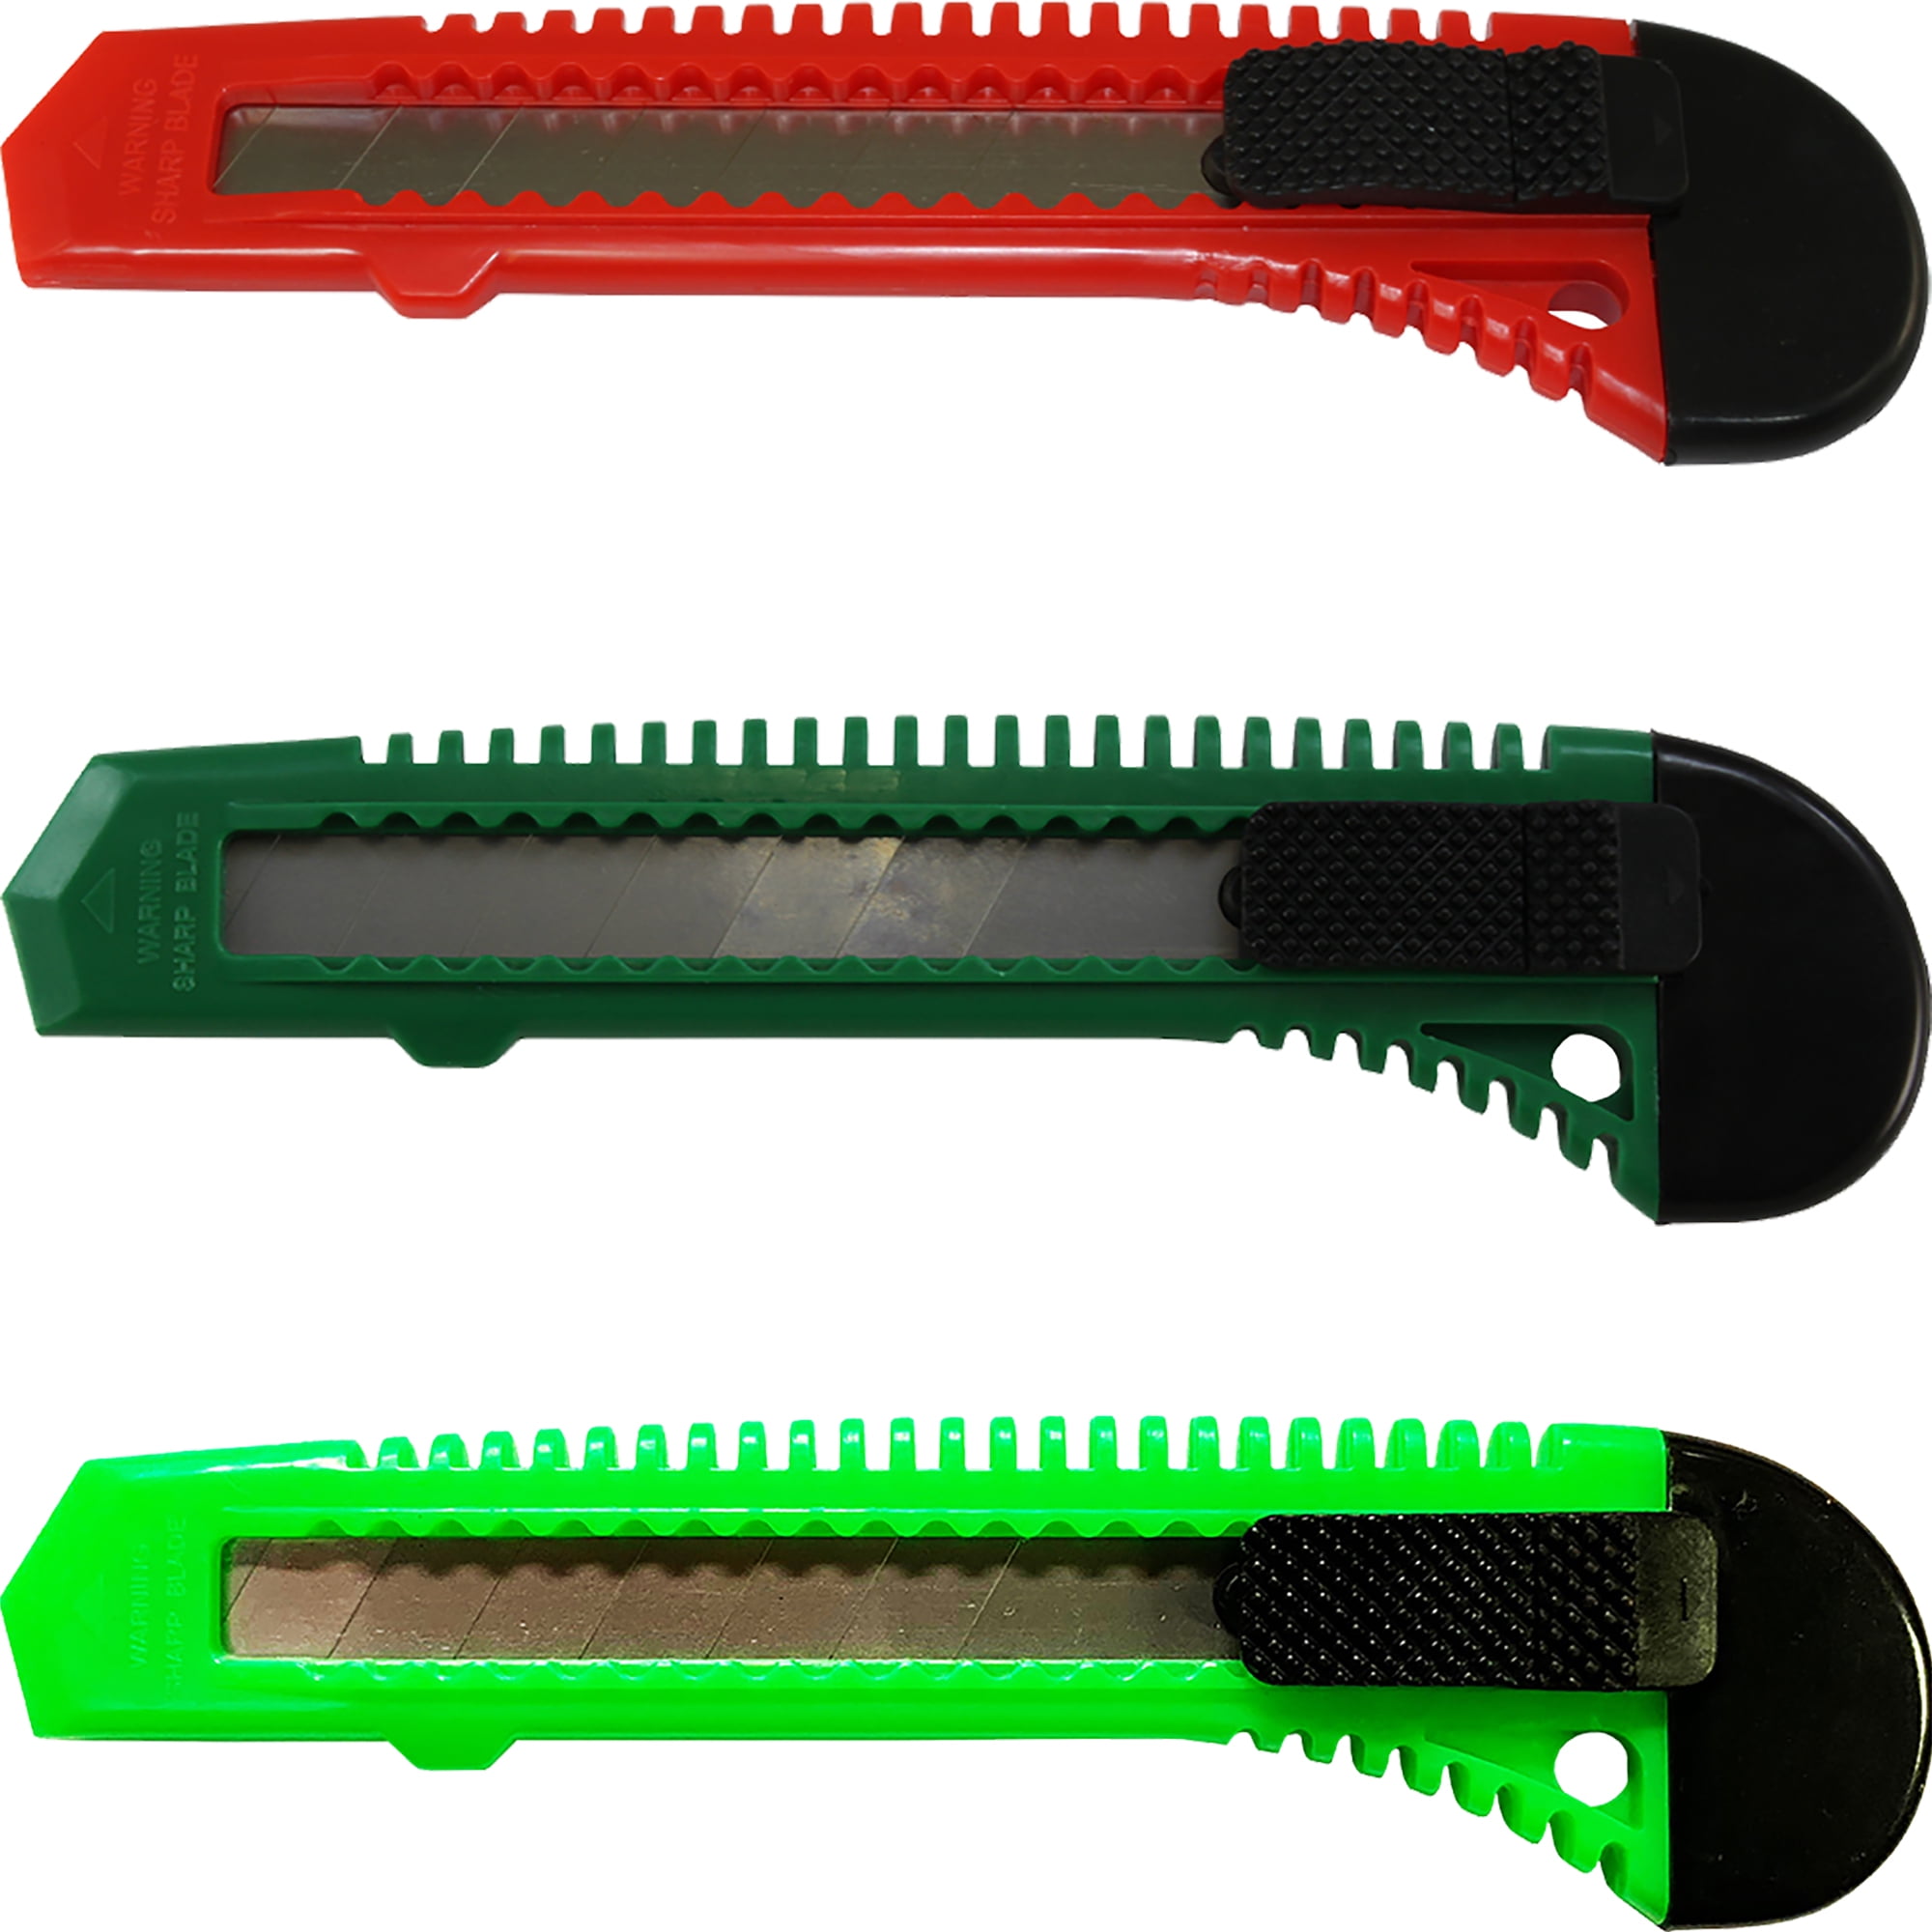 8 Knife Utility Box Cutter Retractable Snap Off Lock Razor Sharp Blade Tool  !!